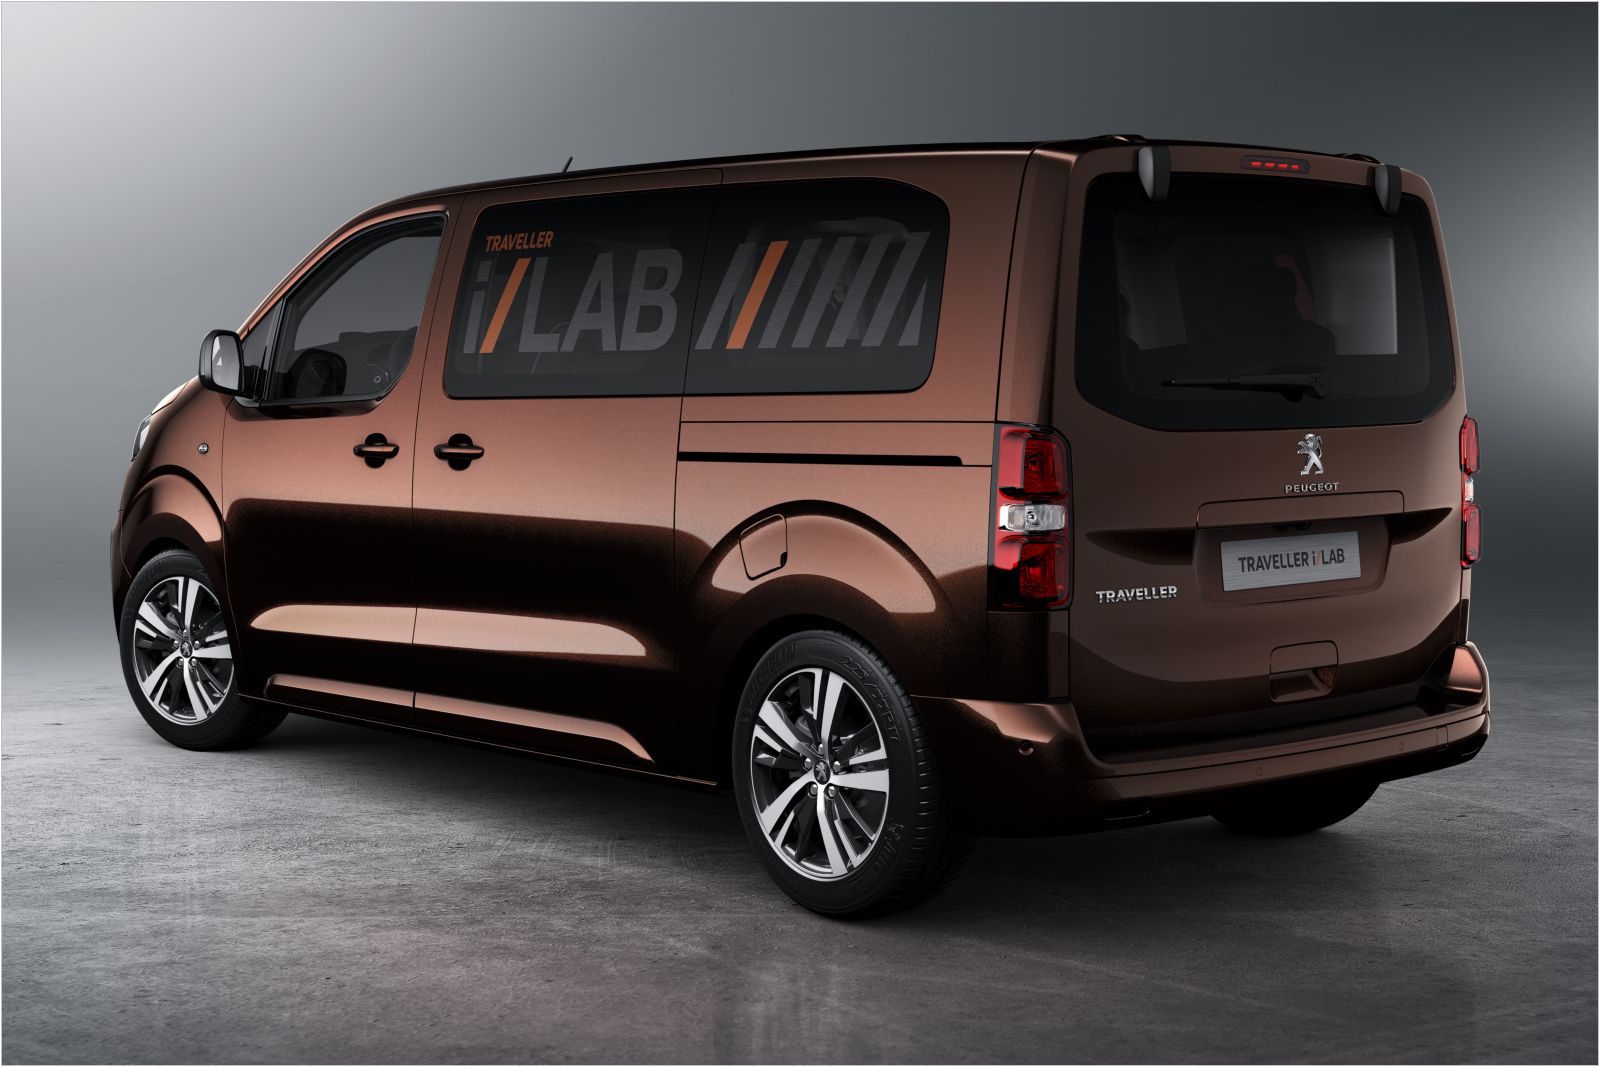 Peugeot Traveller i-Lab Concept, 1600x1067px, img-2